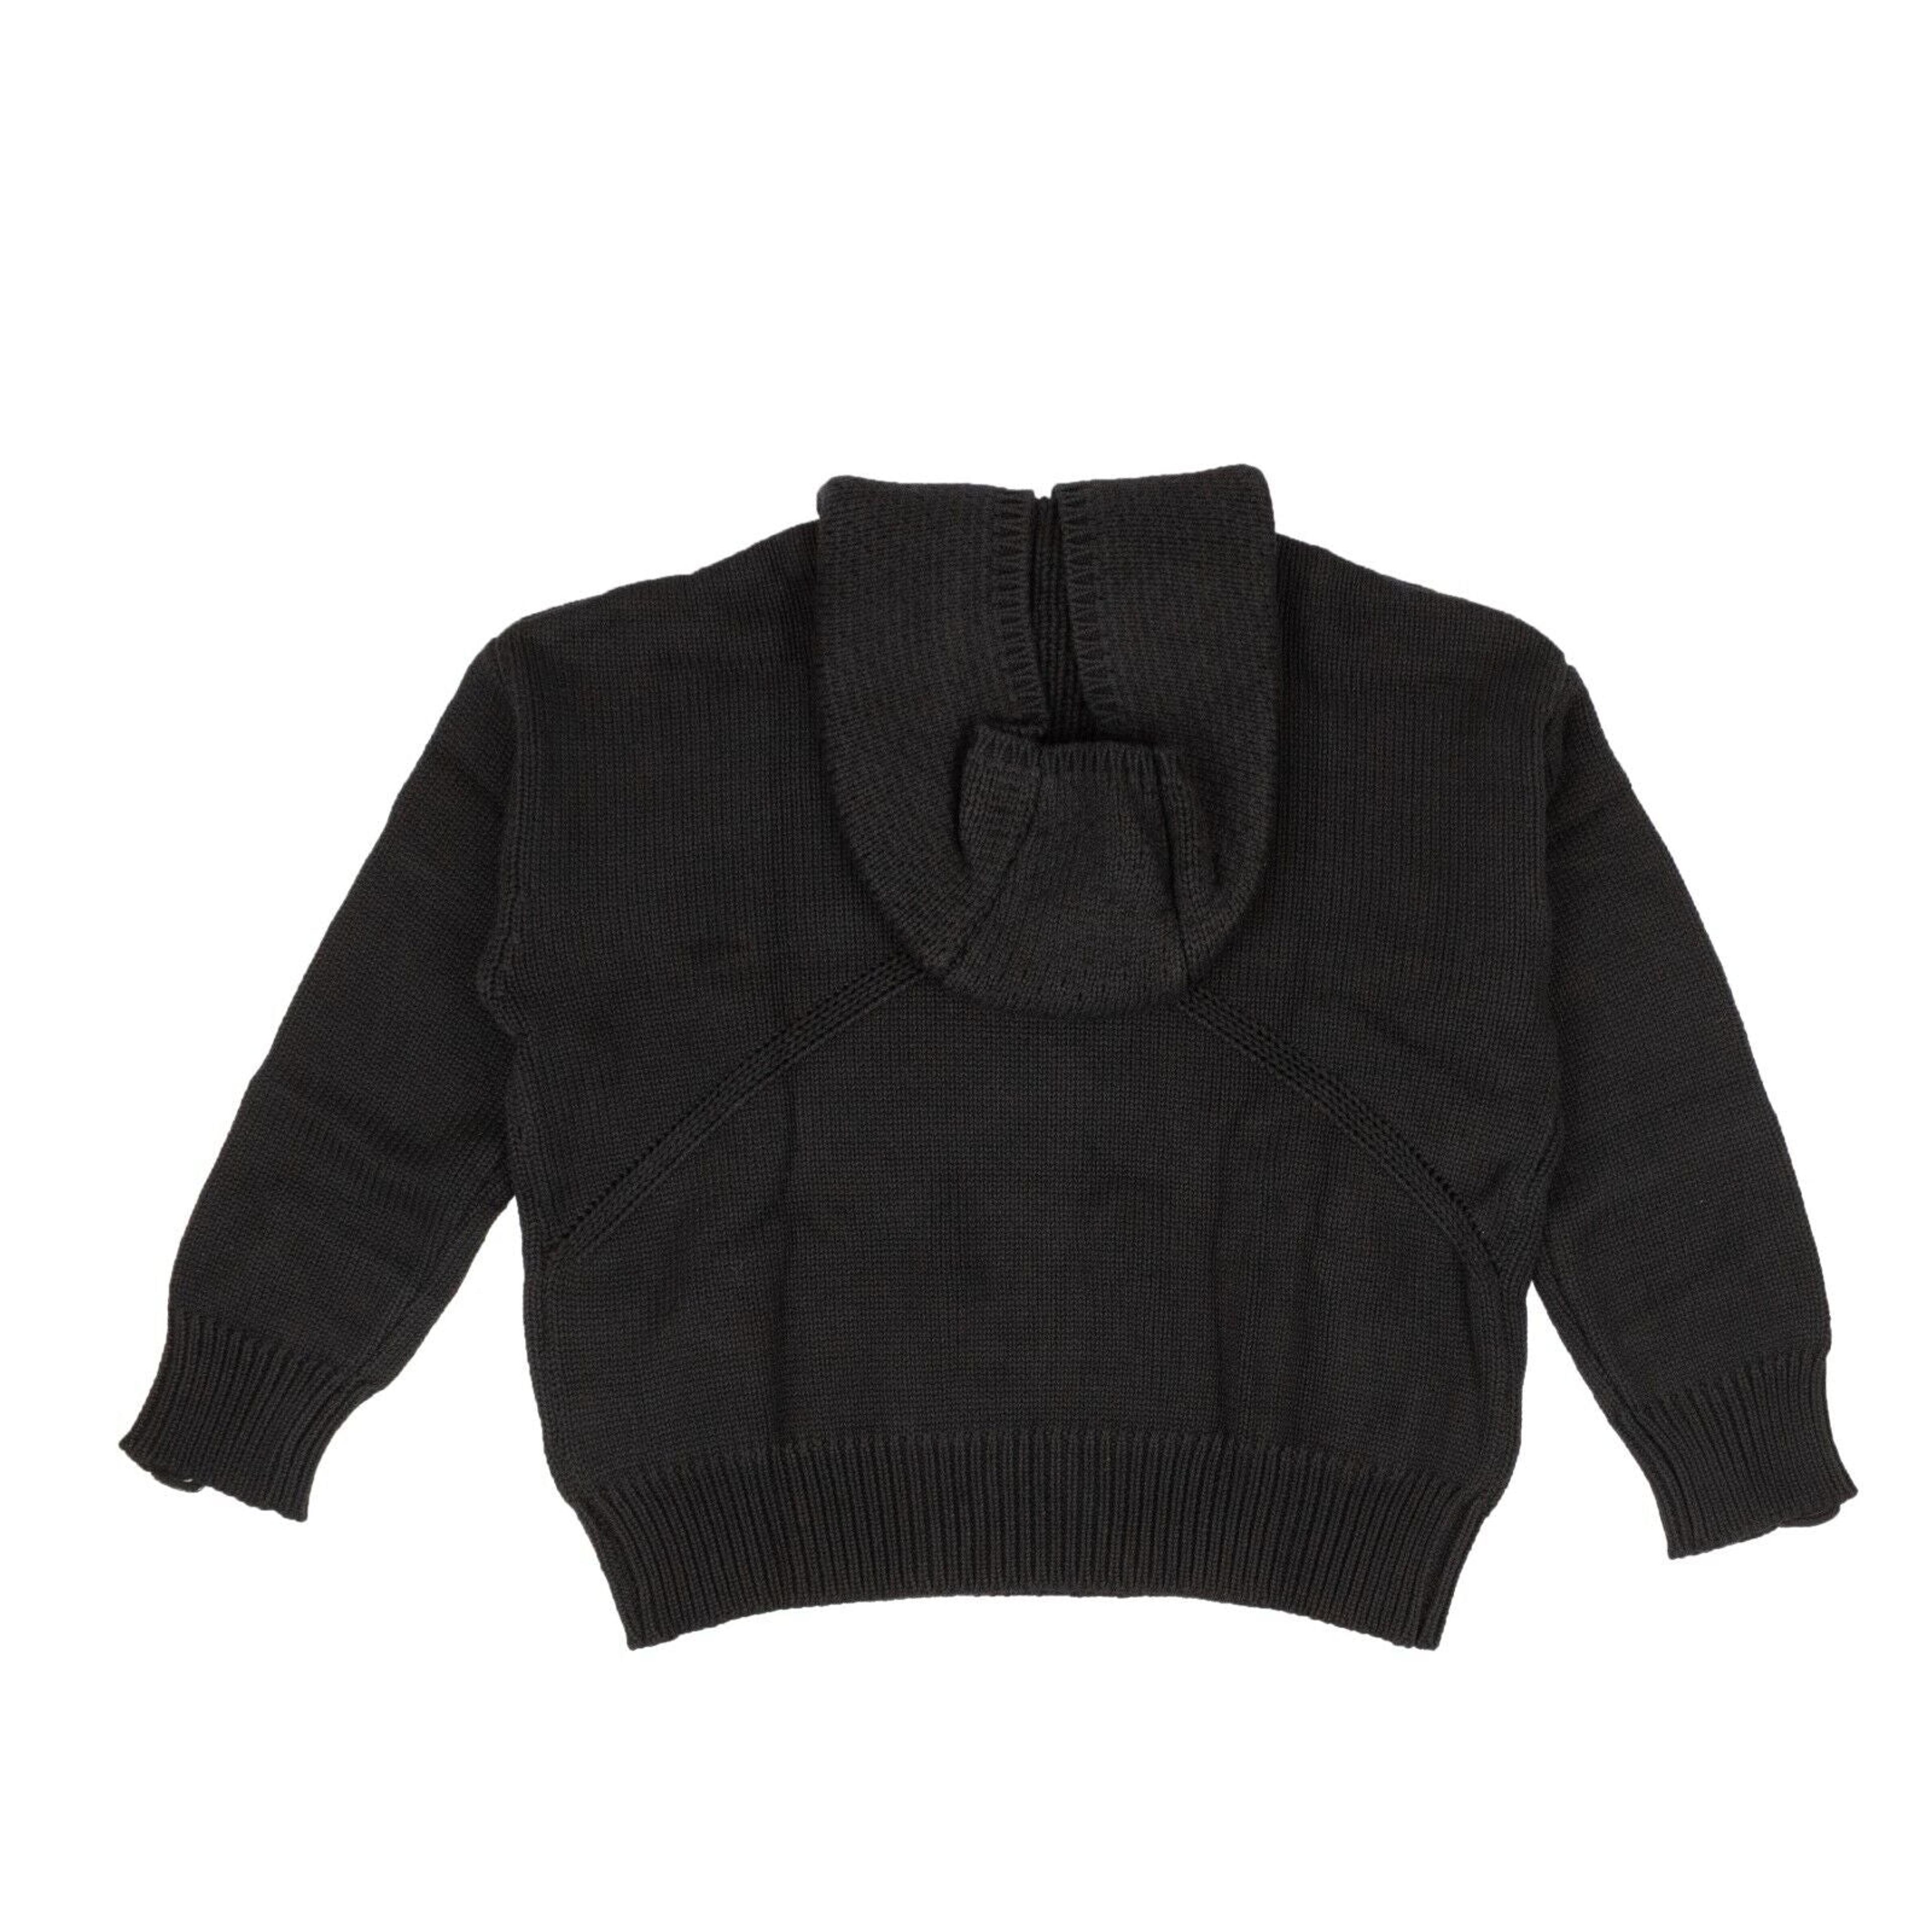 Alternate View 2 of Rhude Cotton Laze Pullover Hoodie Sweatshirt - Black